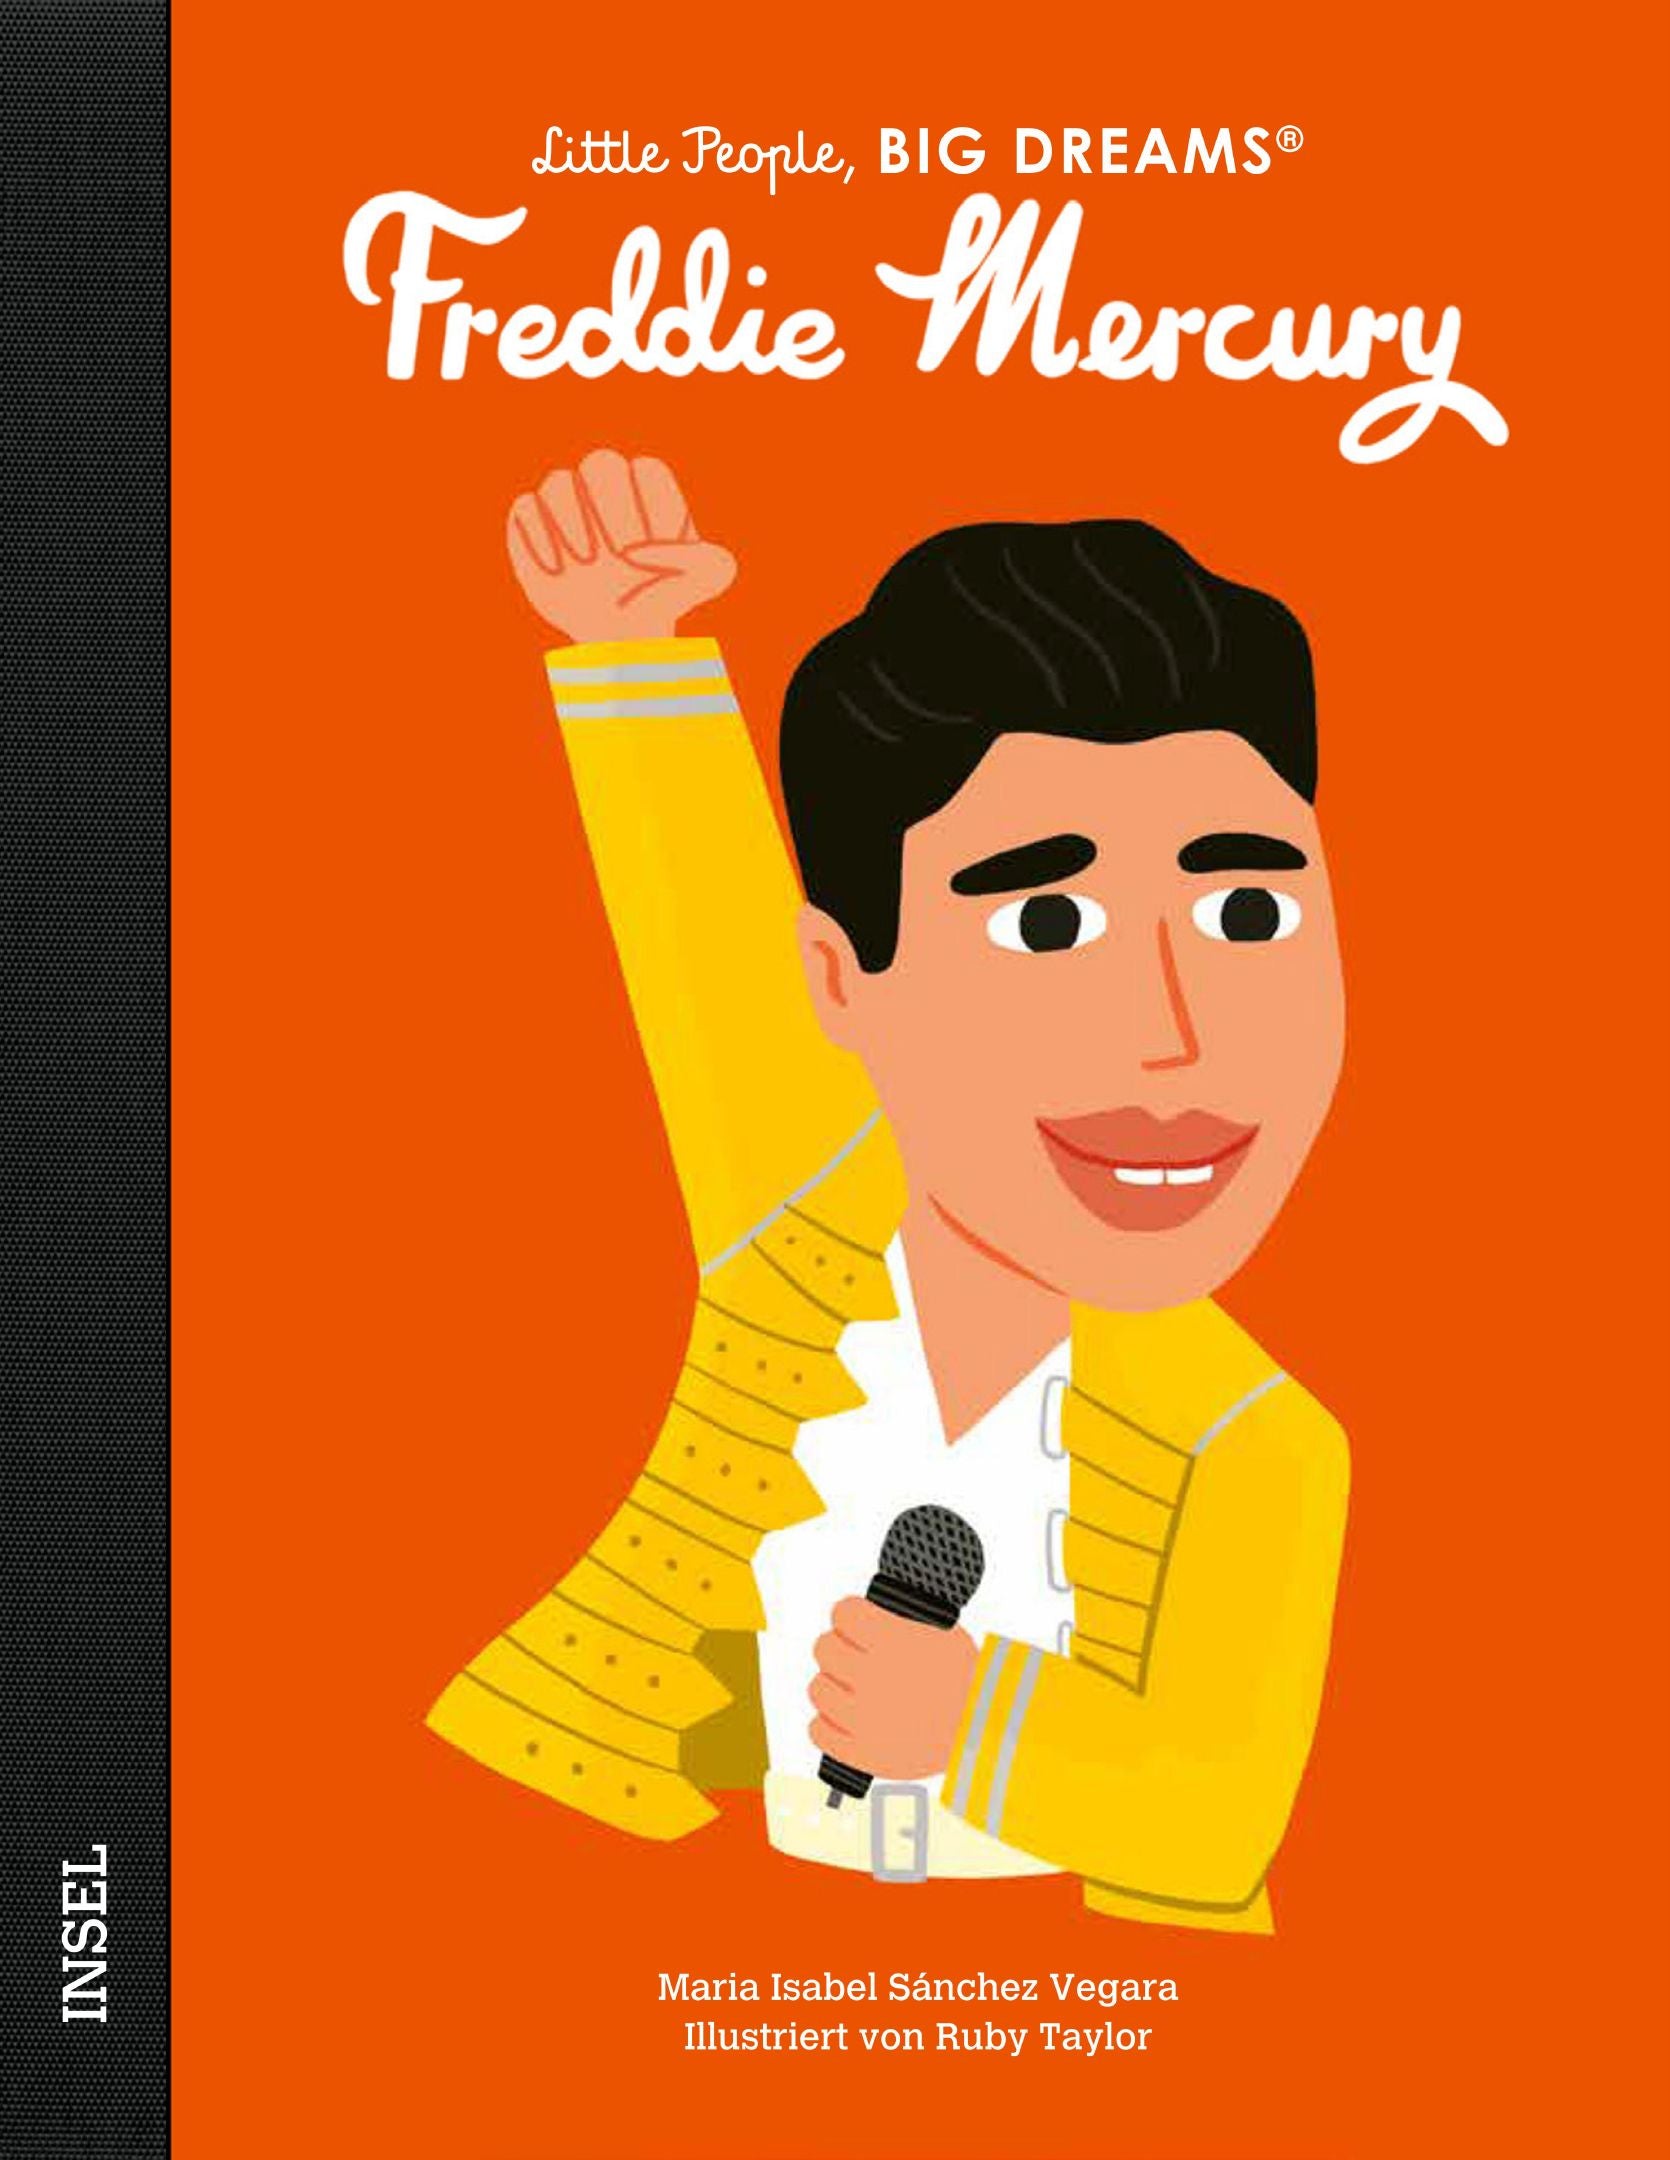 Little People - Freddie Mercury